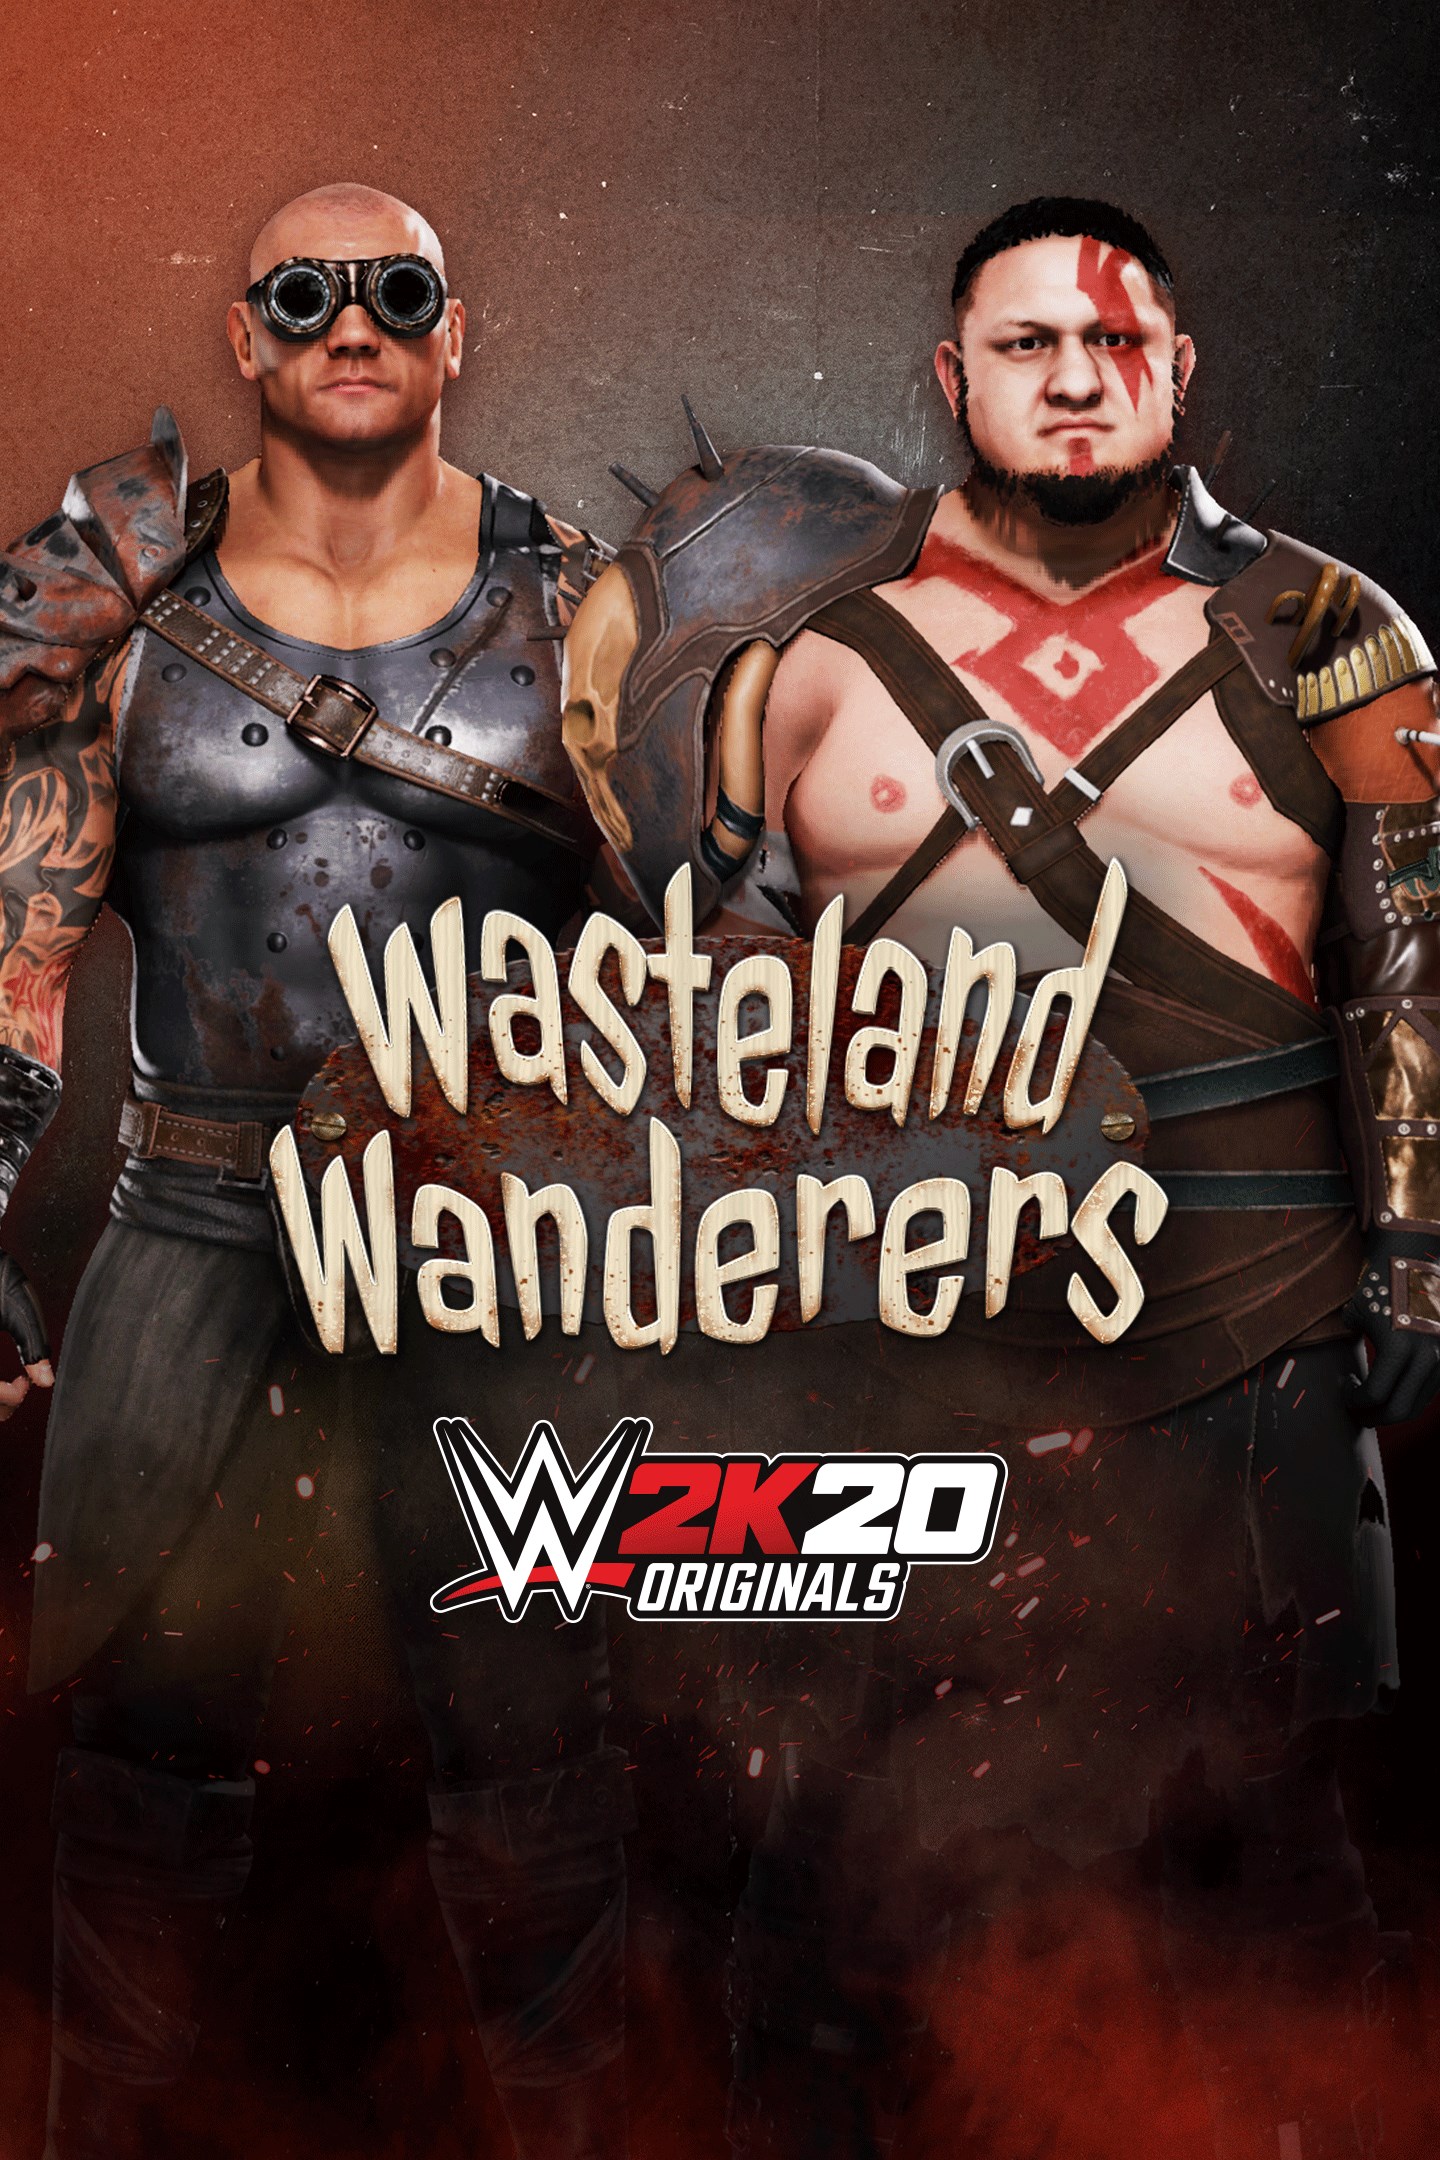 Buy Wwe 2k20 Originals Wasteland Wanderers Microsoft Store